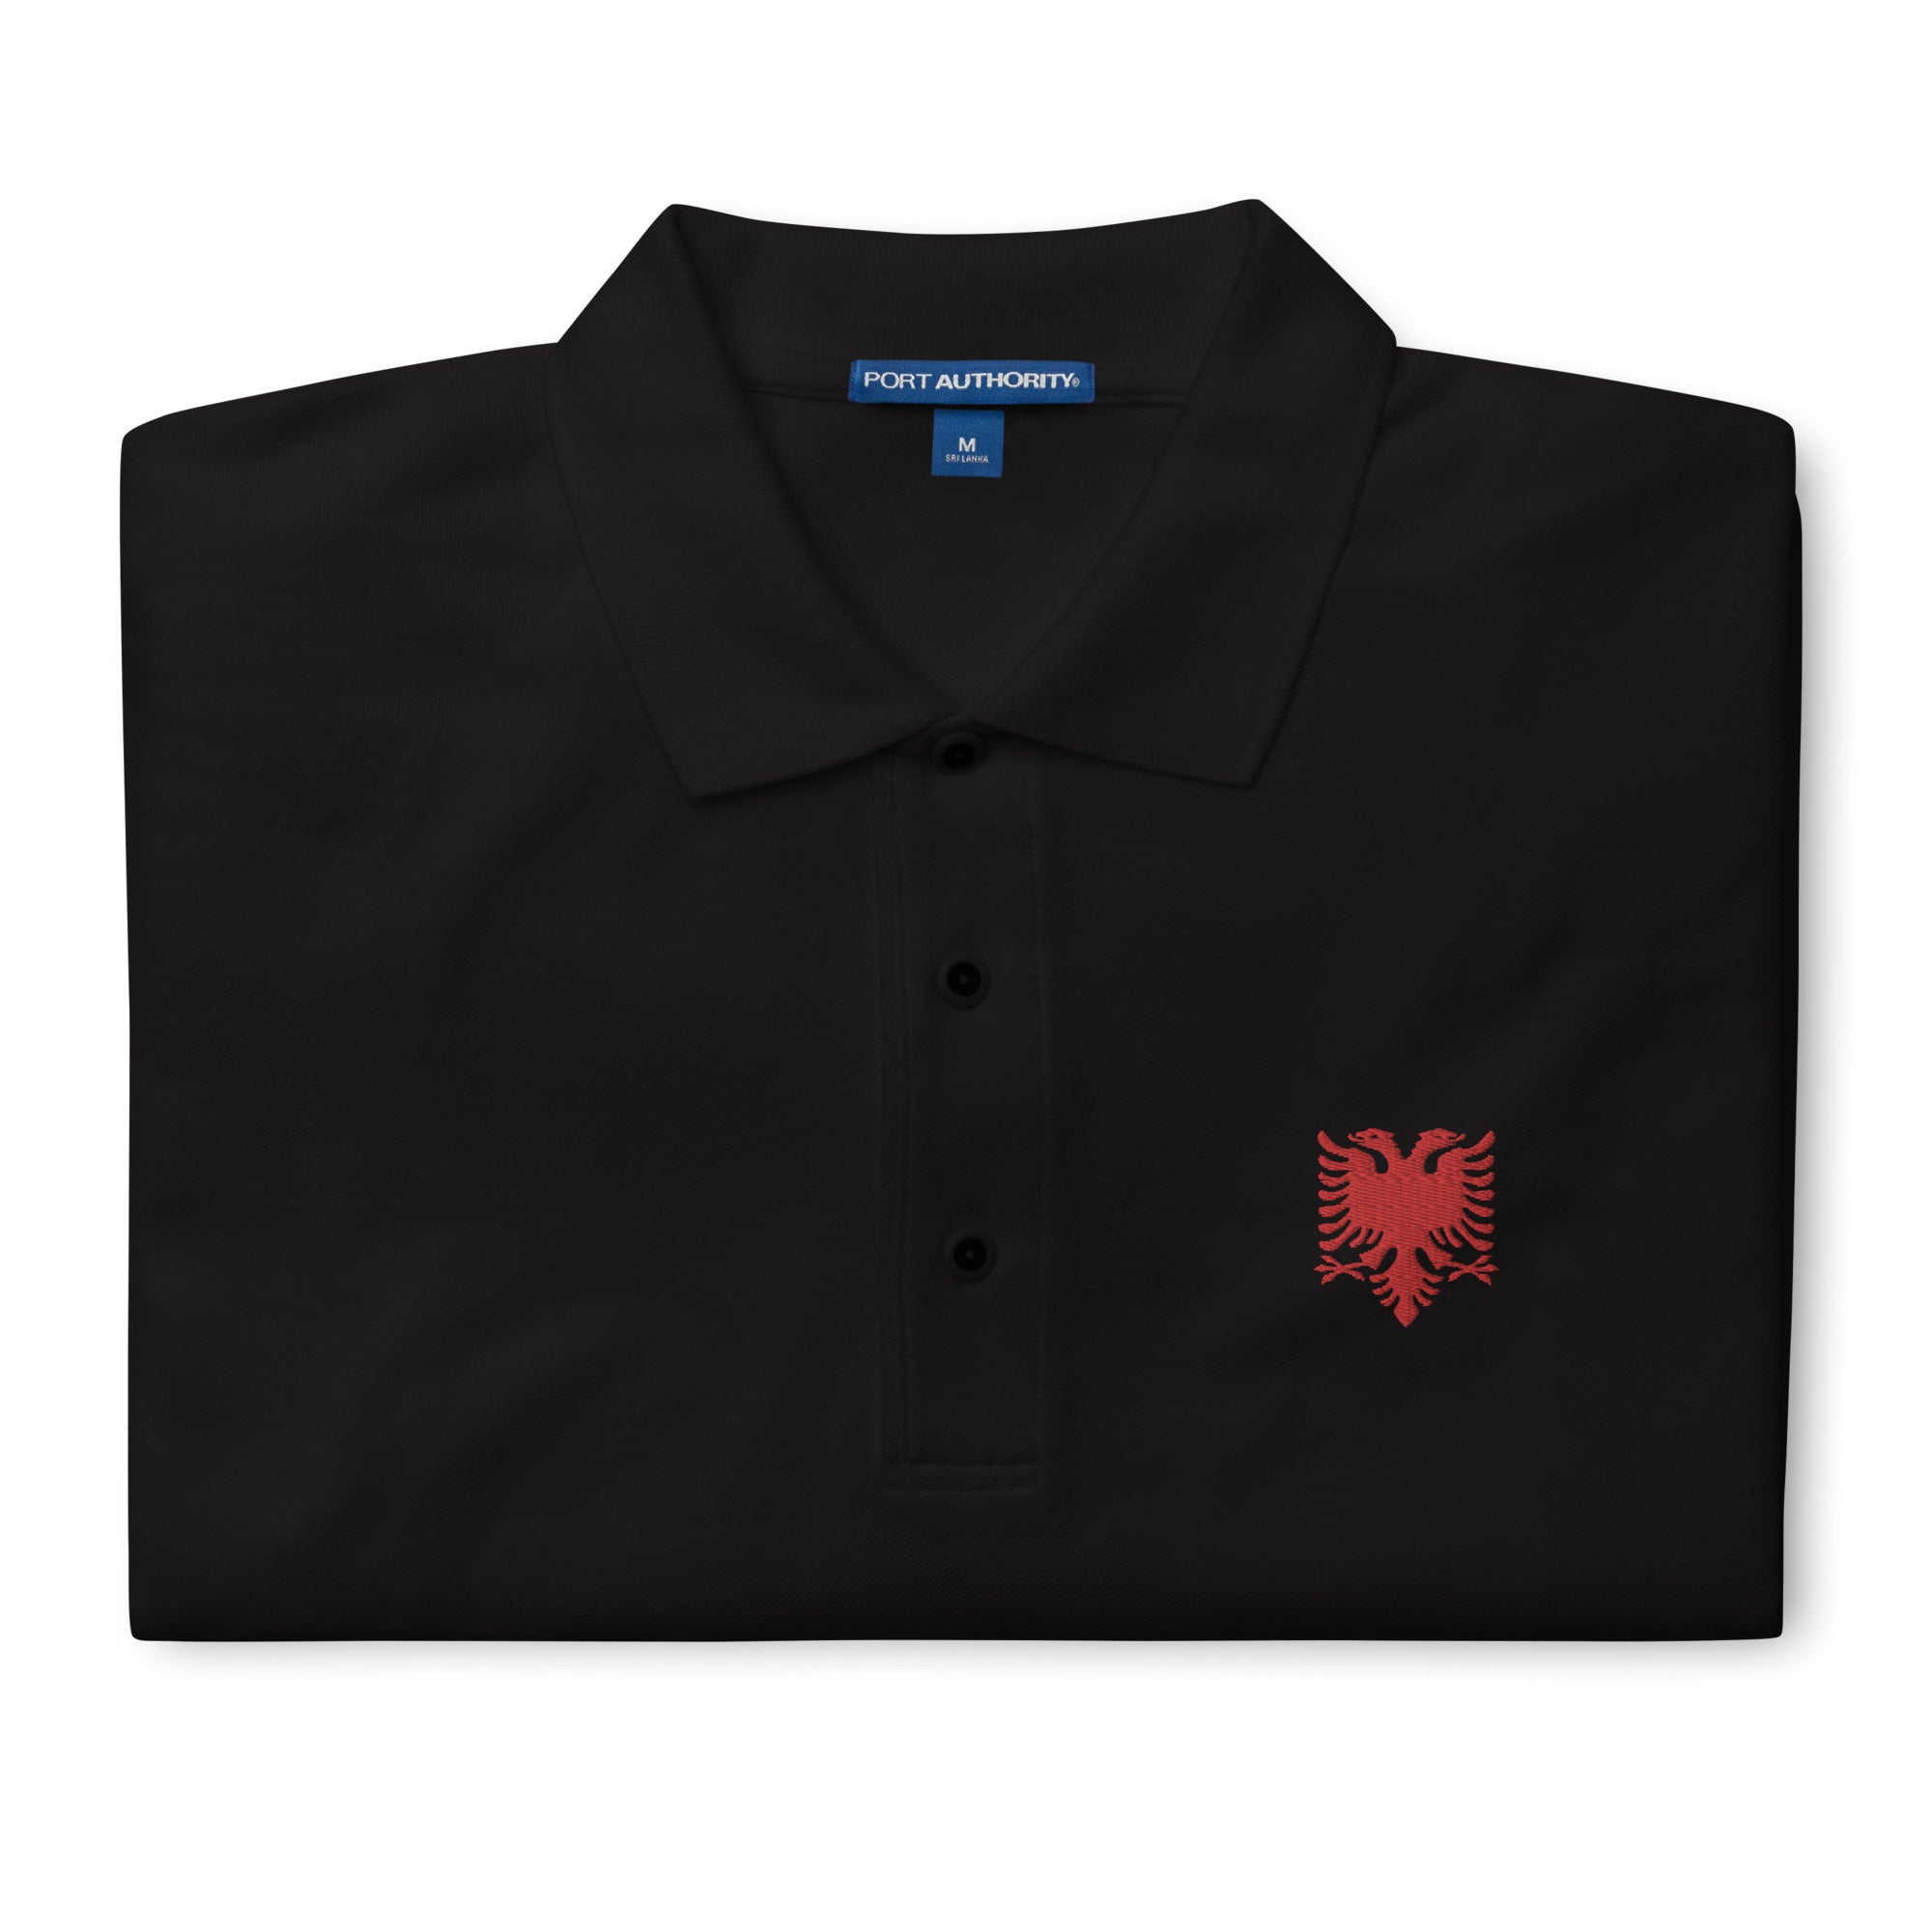 Albanian eagle Men's Premium Polo t-shirt.